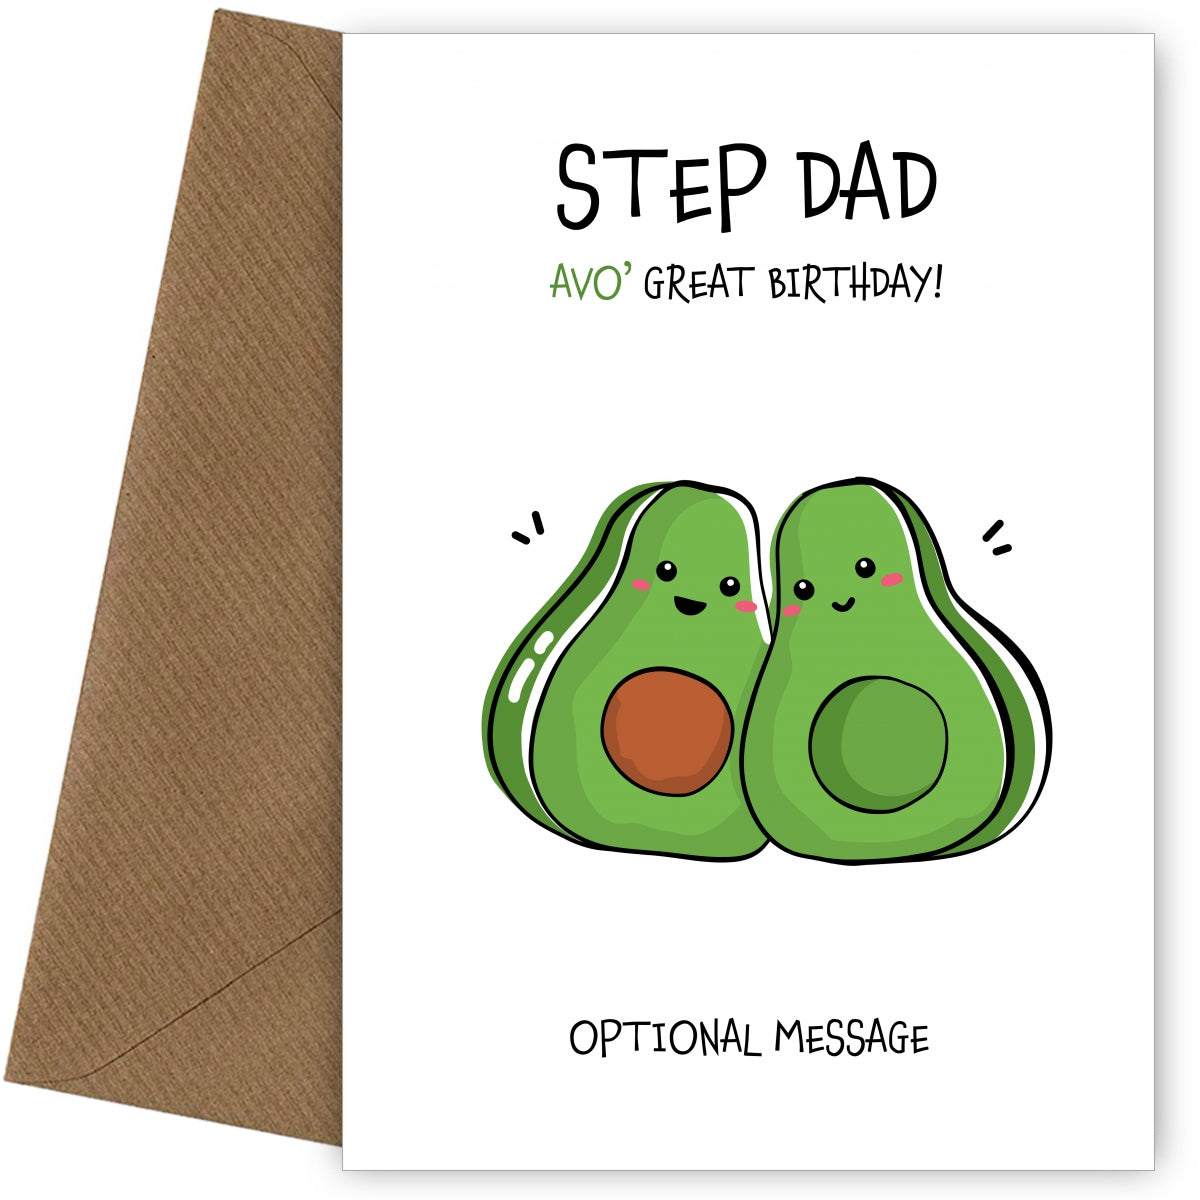 Avocado Birthday Card for Step Dad